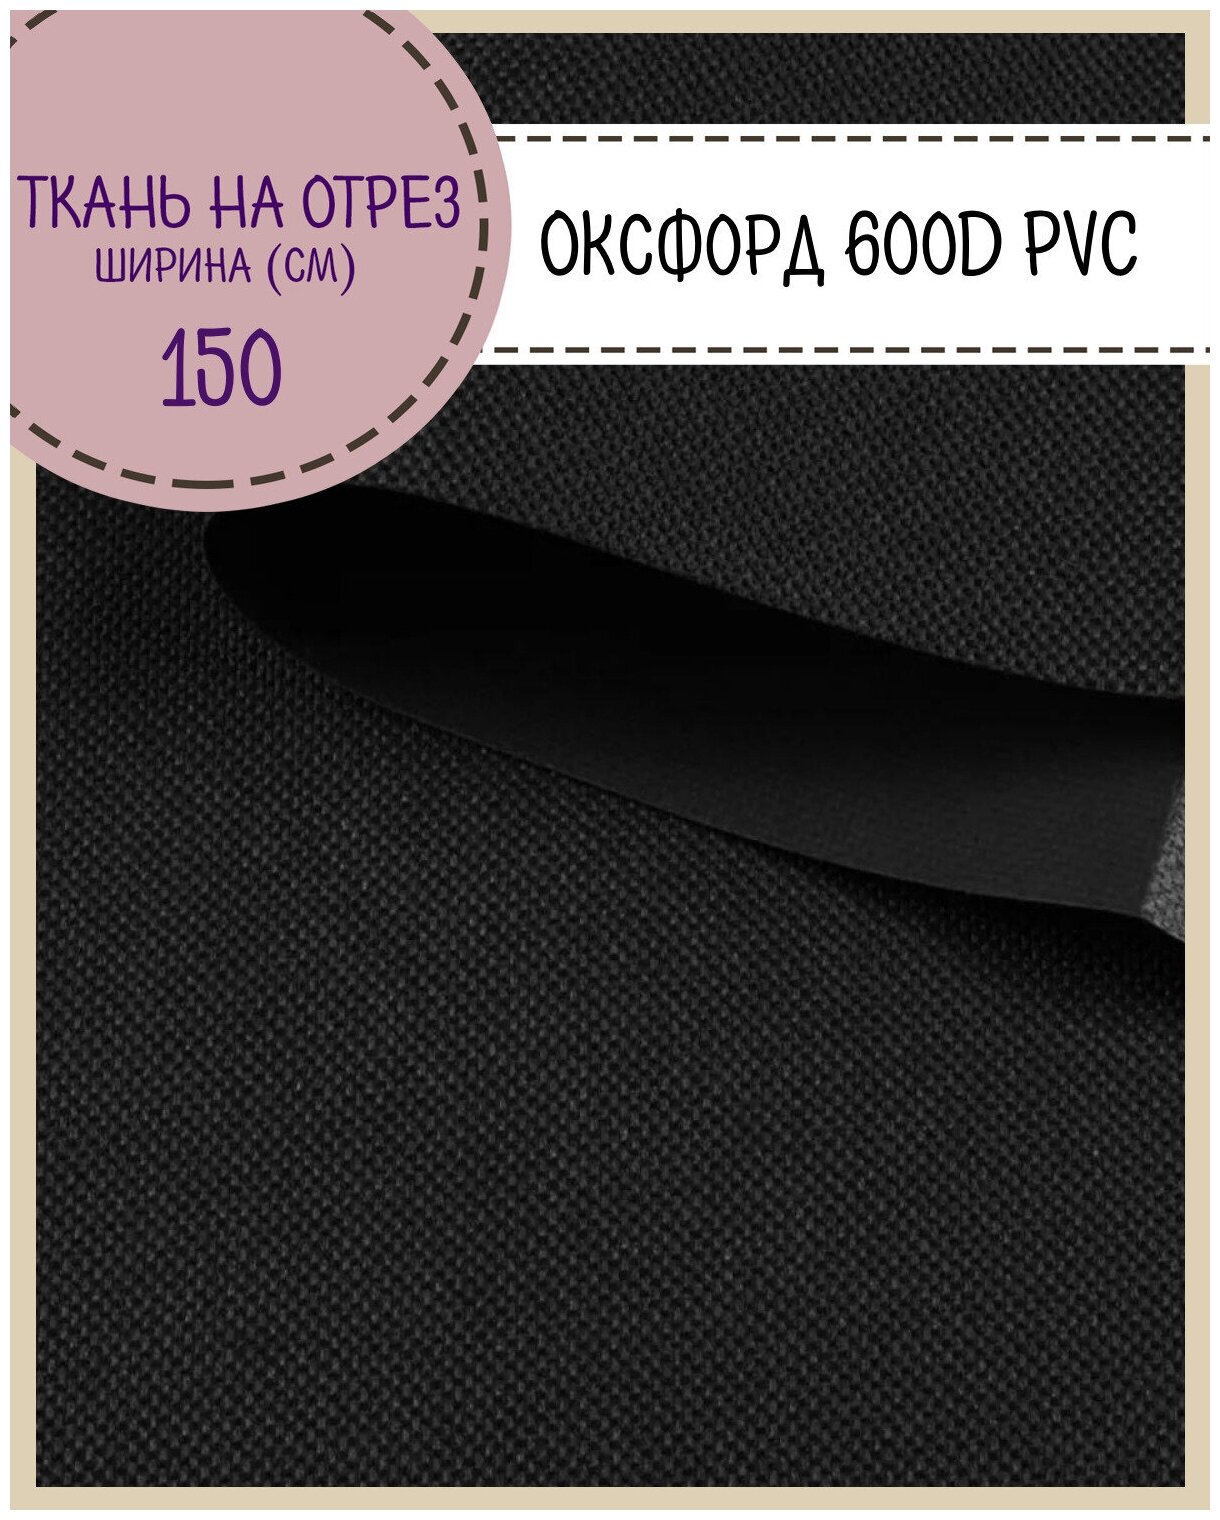 Ткань Оксфорд 600D PVC (ПВХ), водоотталкивающая, цв. черный, на отрез, цена за пог. метр